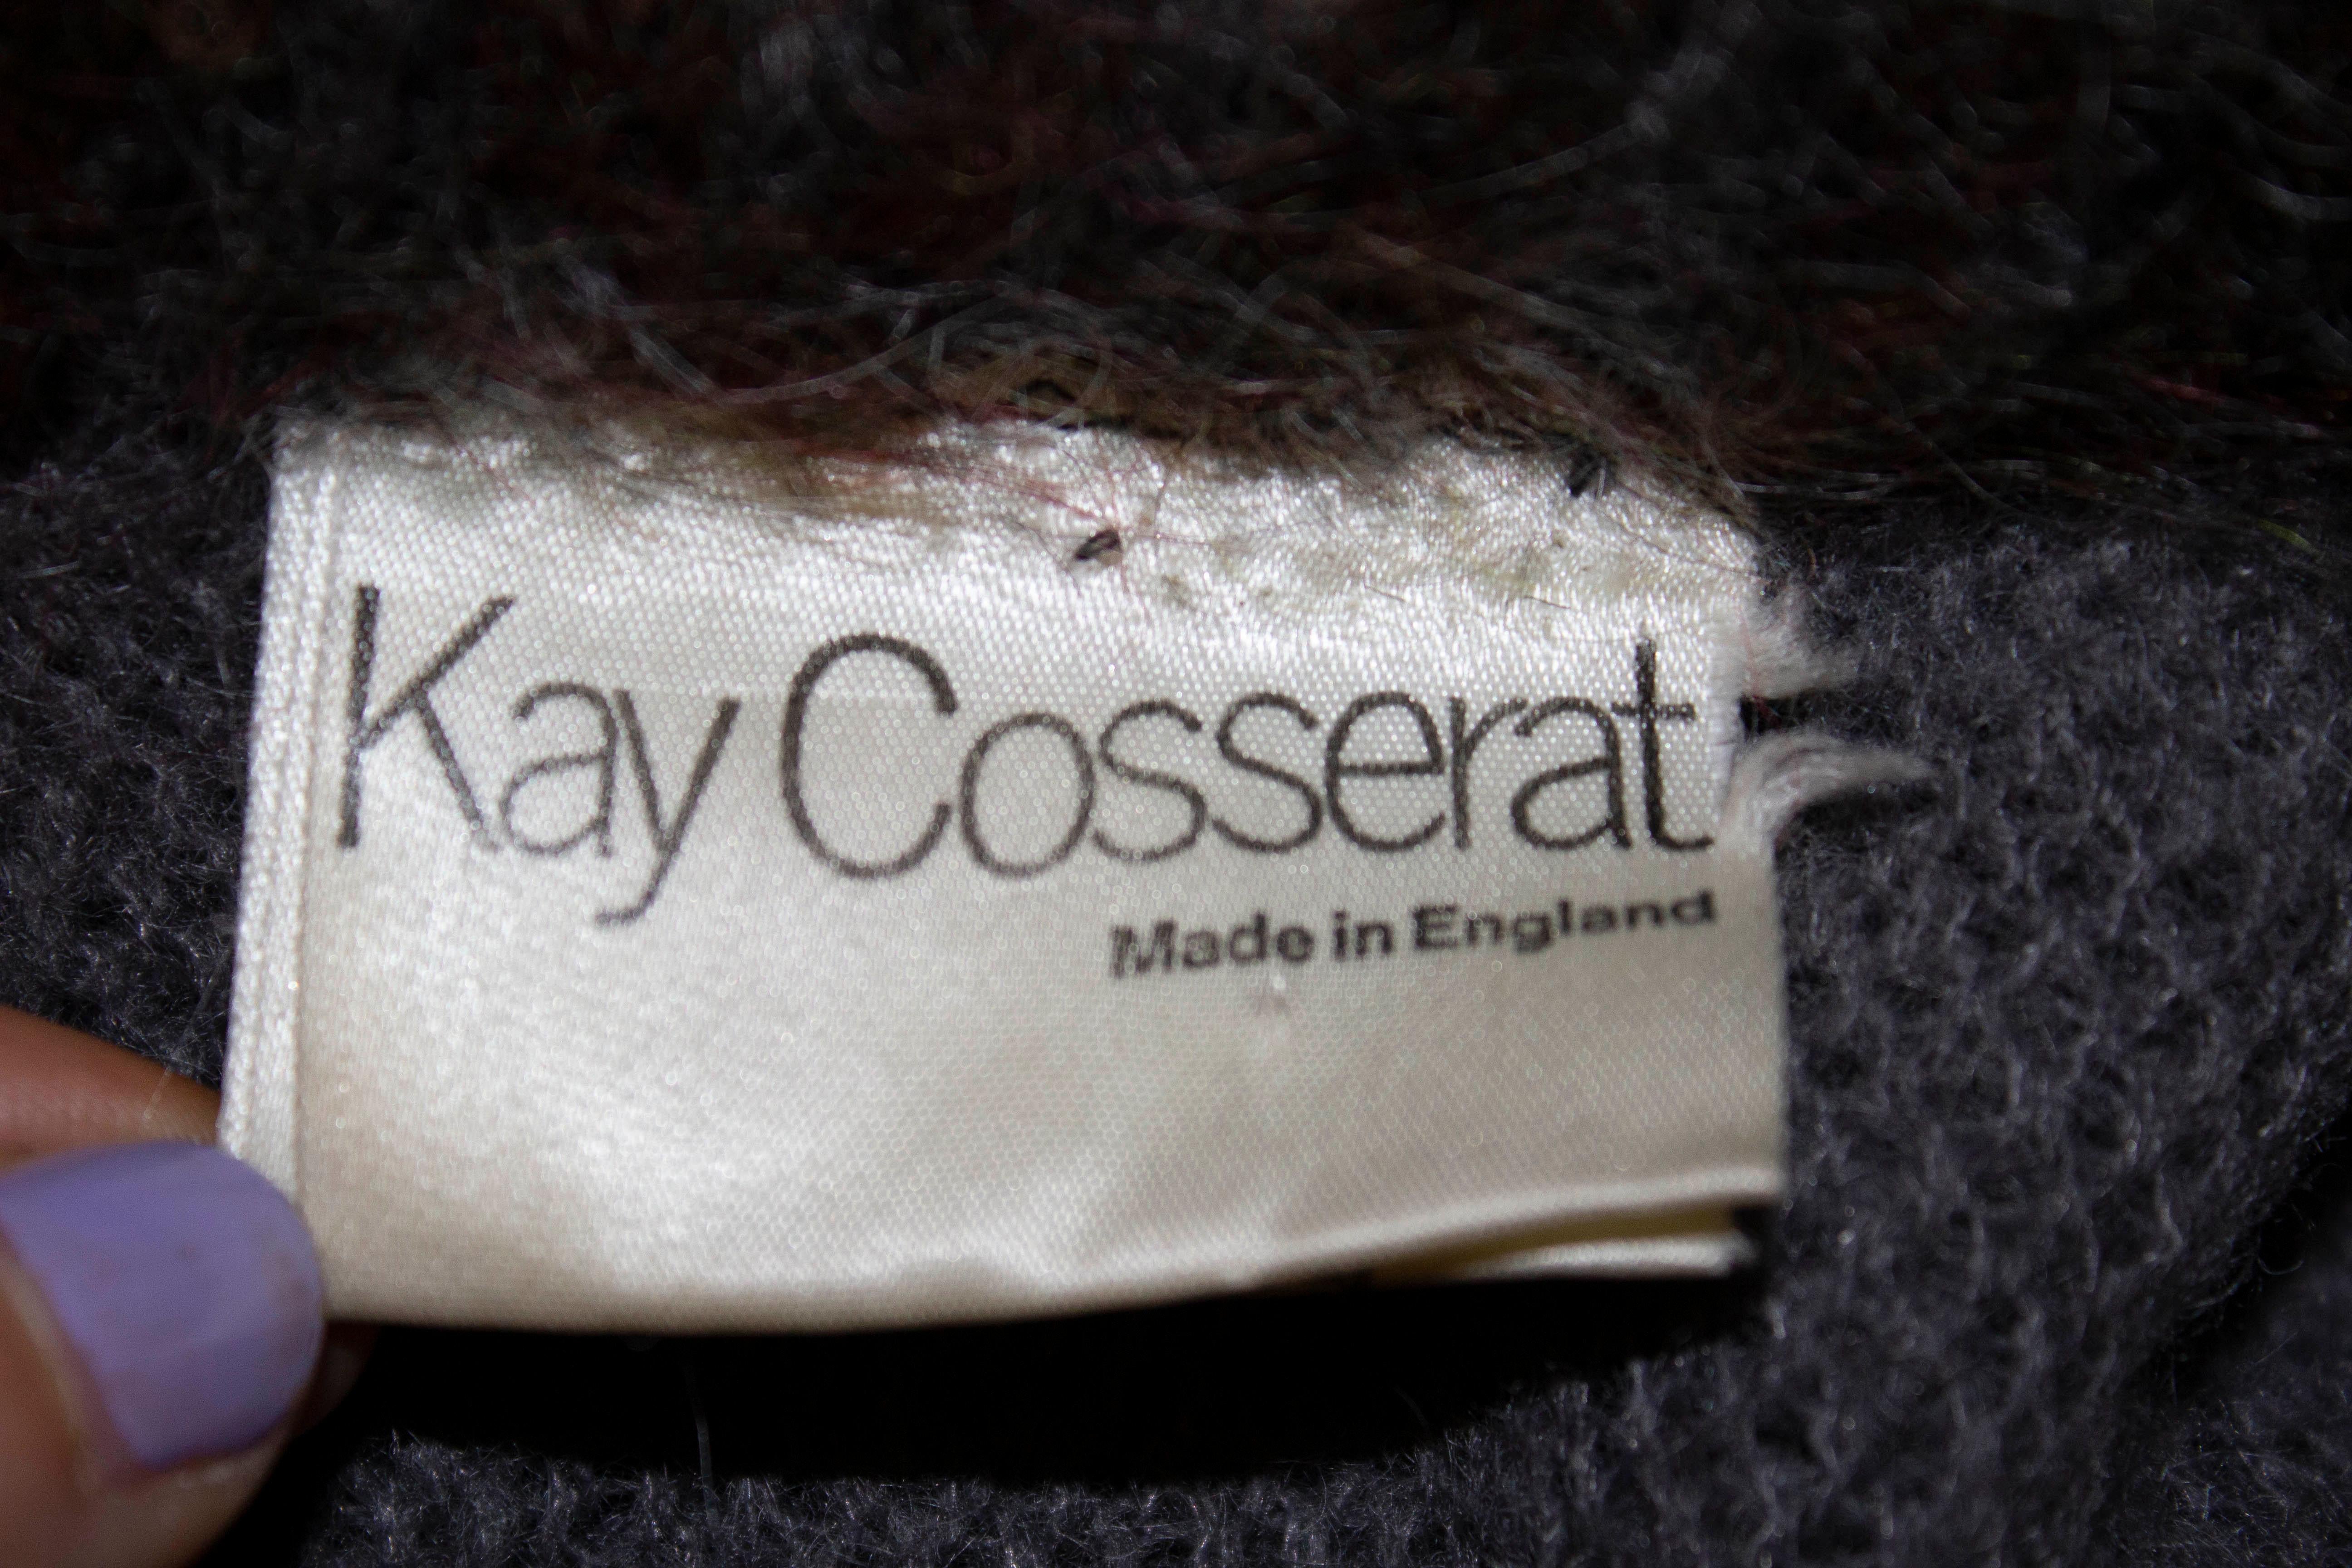 Rare Vintage Kay Cosserat Wool Coat For Sale 1